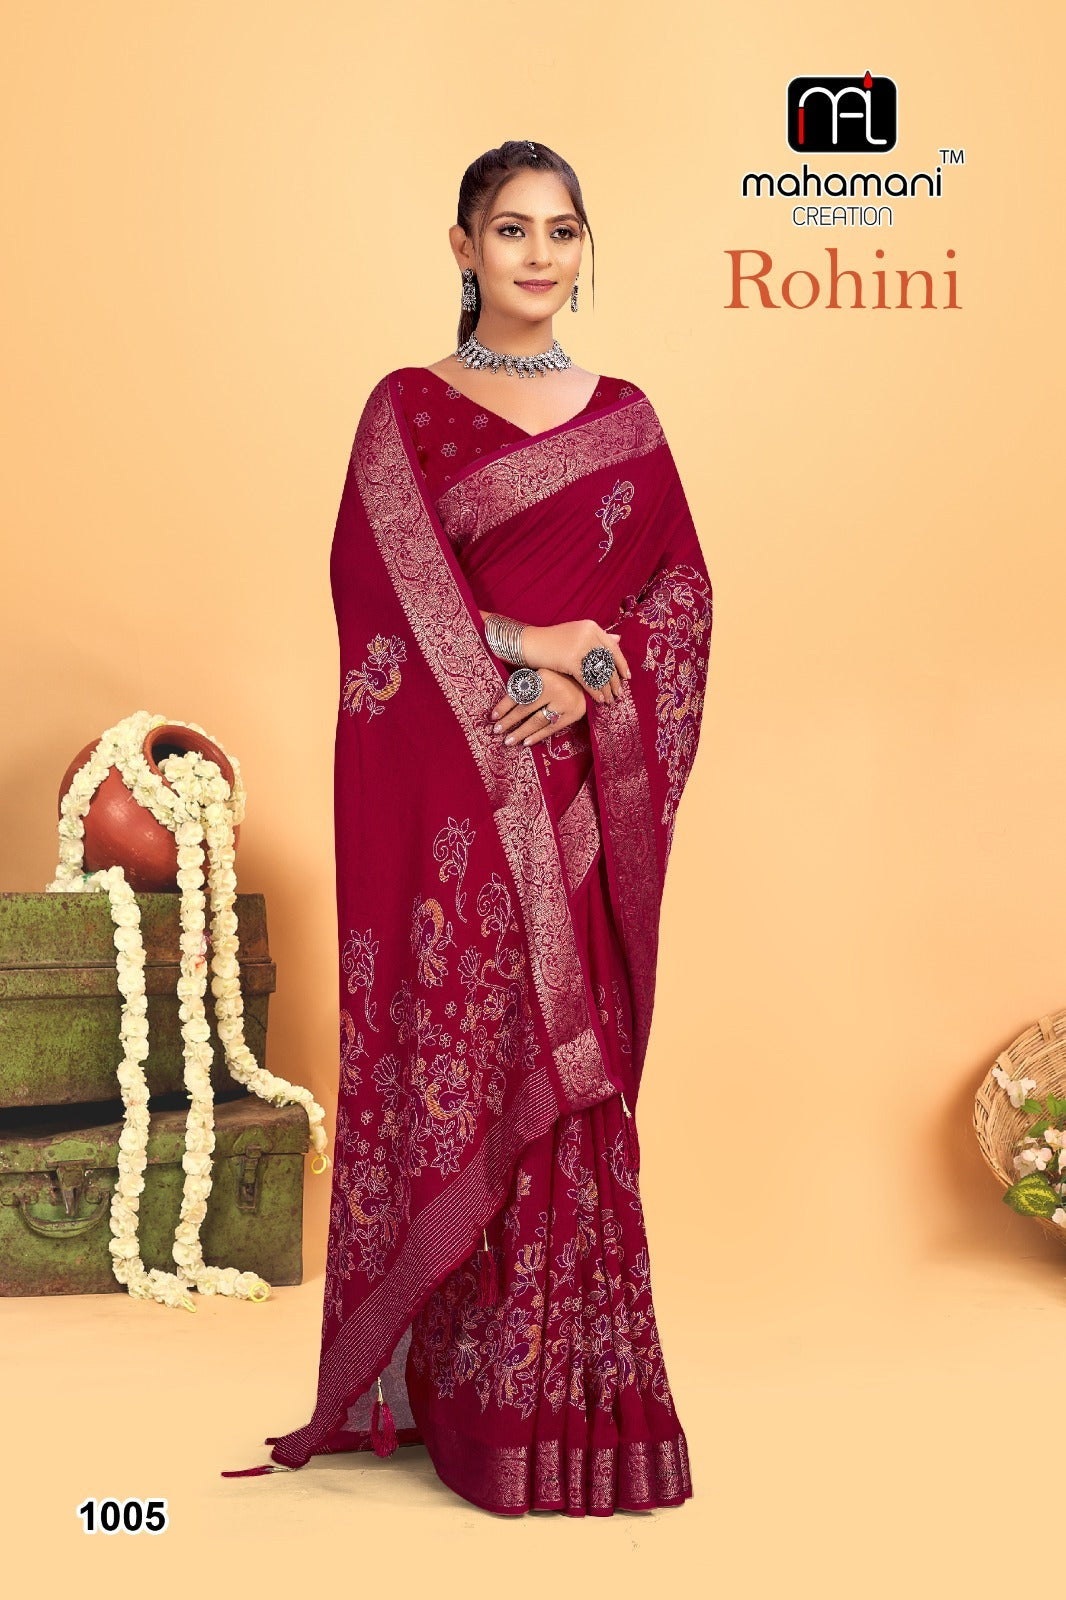 Rohini Mahamani Creation Weaving Sarees